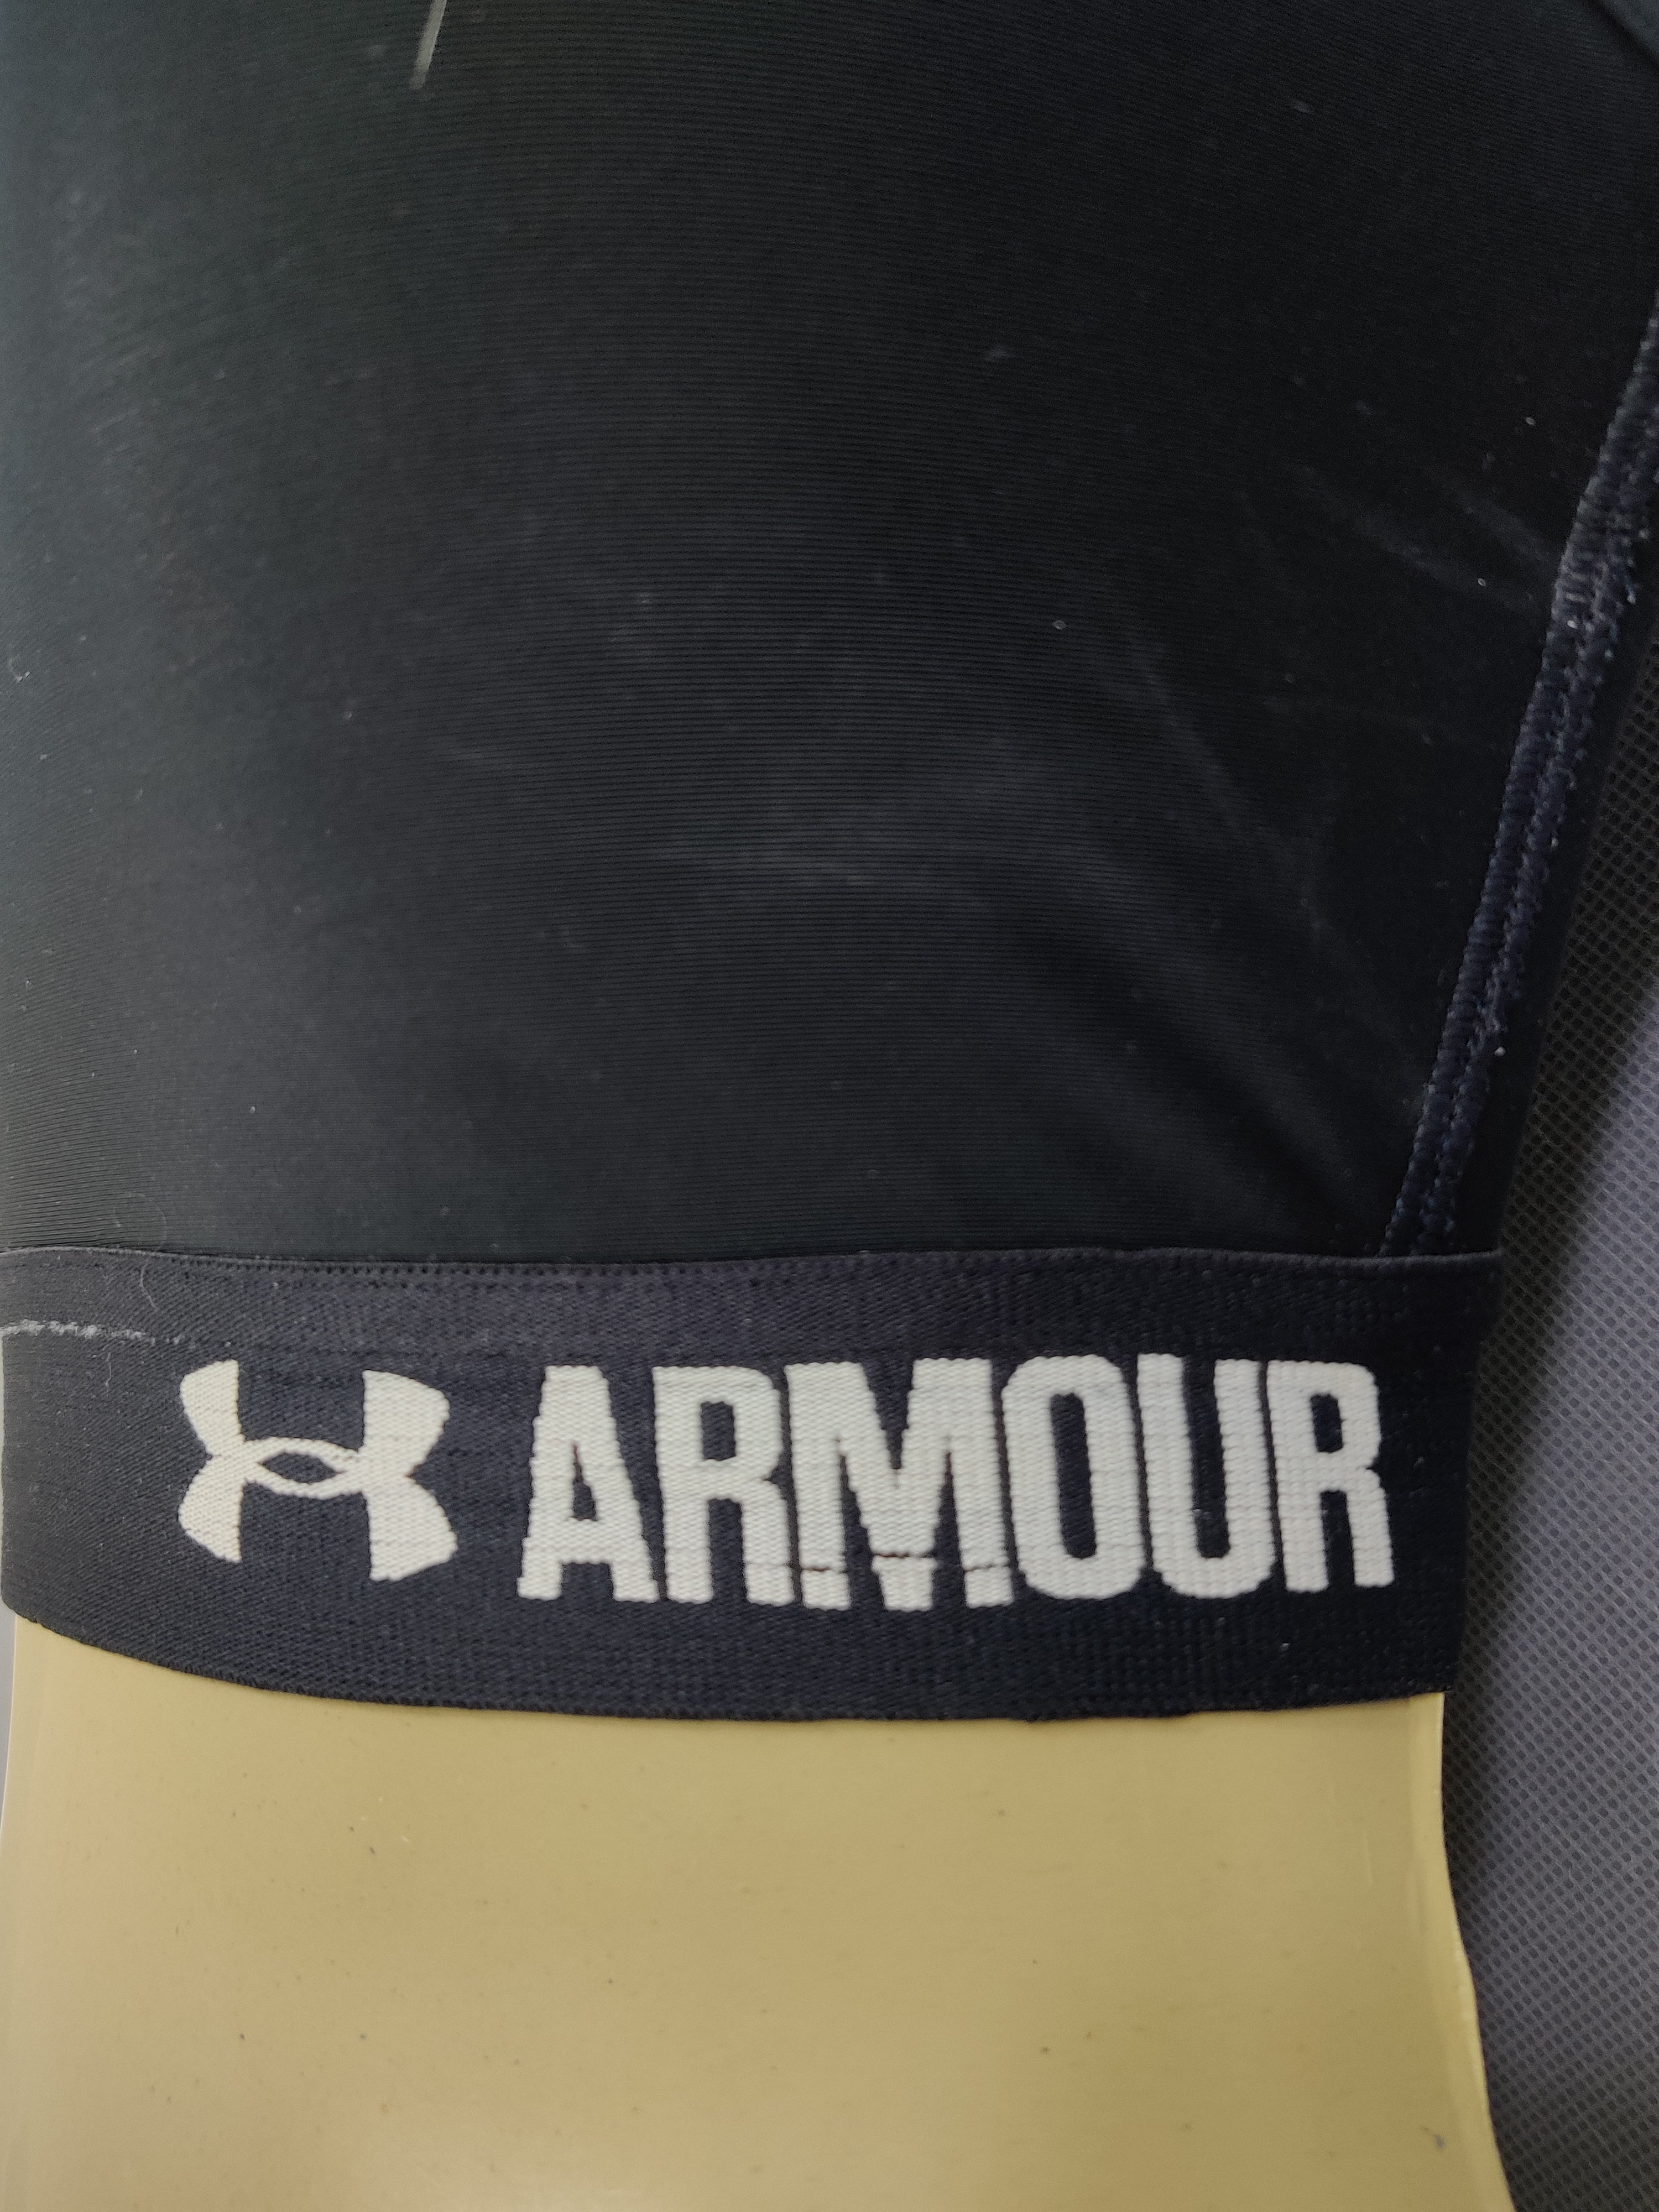 Under Armour Branded Original Sports Gym Bra For Women